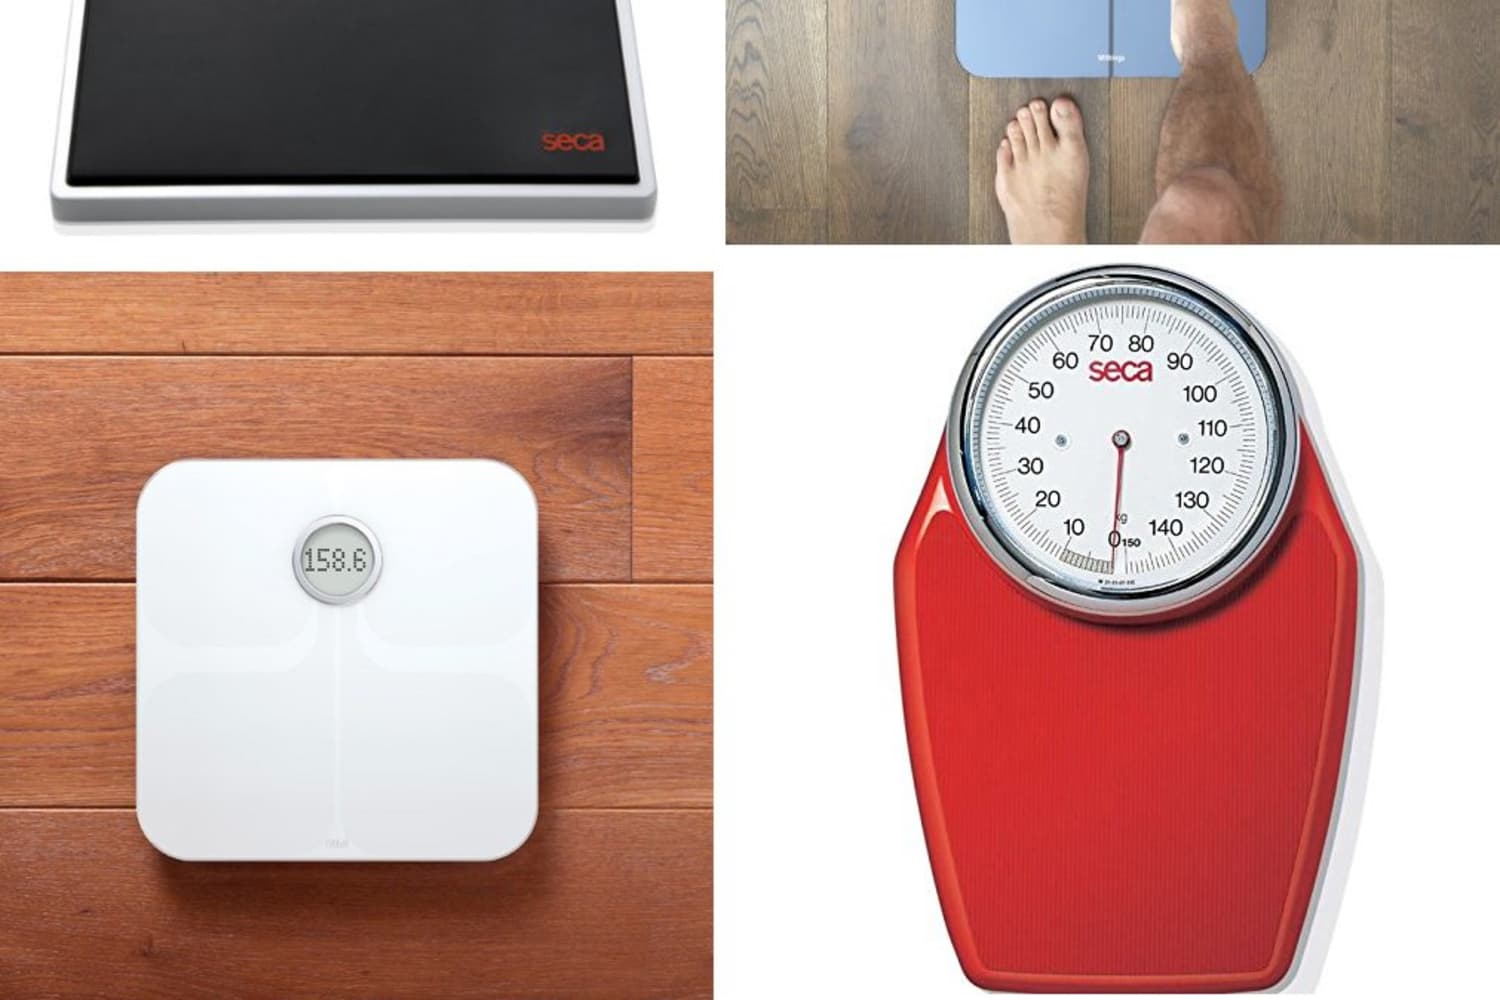 Seca 803 Digital Body Weight Scale